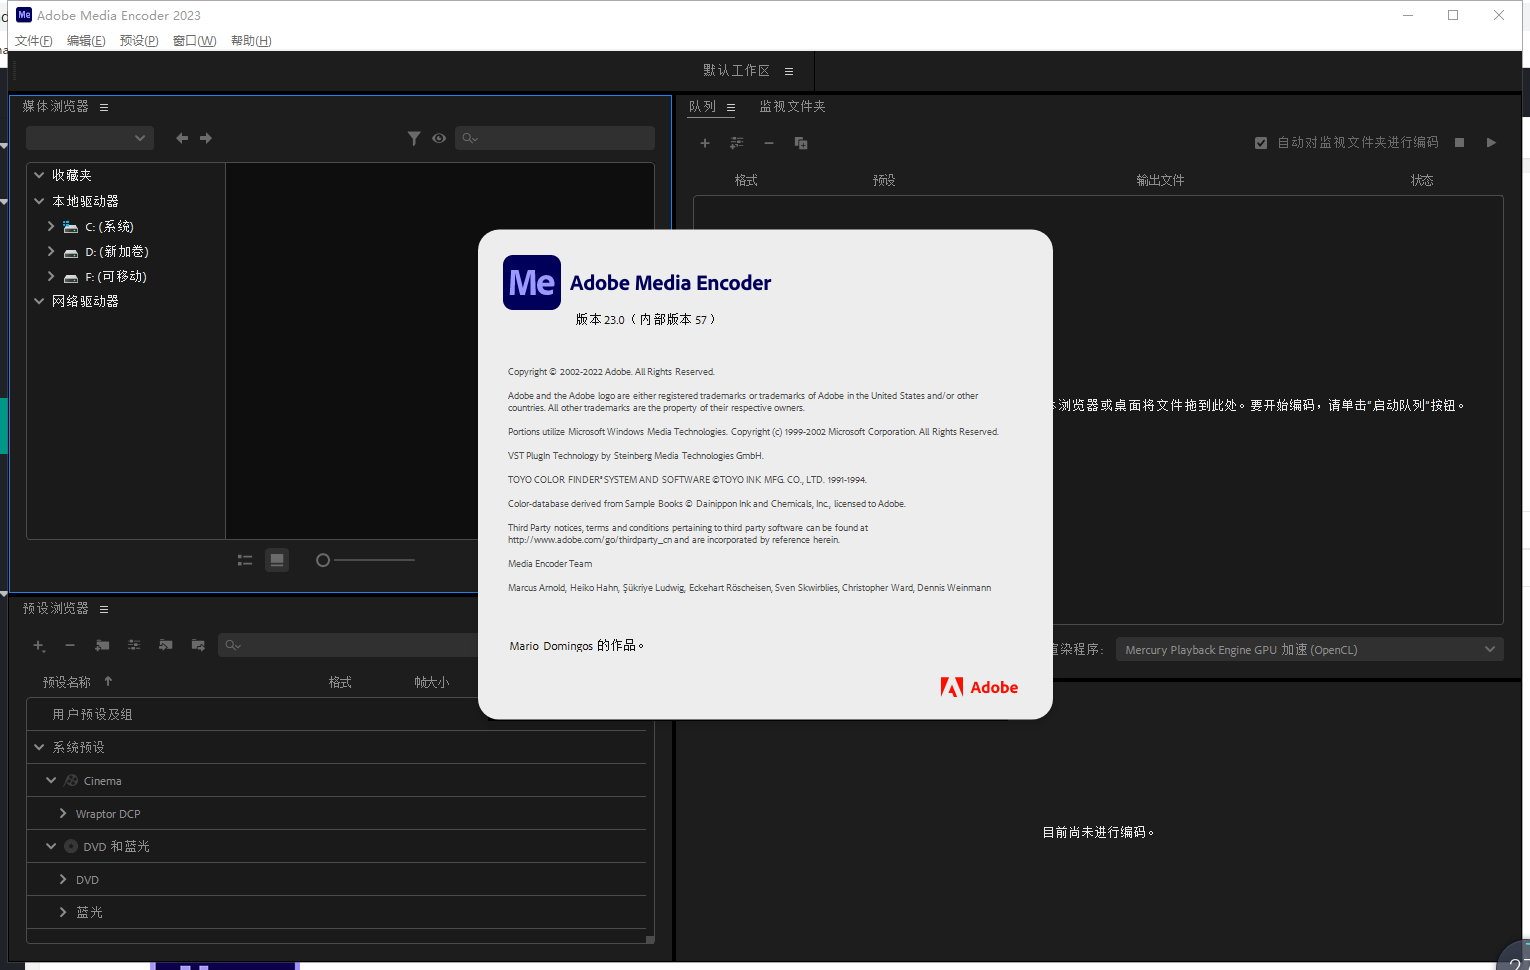 Adobe Media Encoder 2023 v23.5.0.51 for ios download